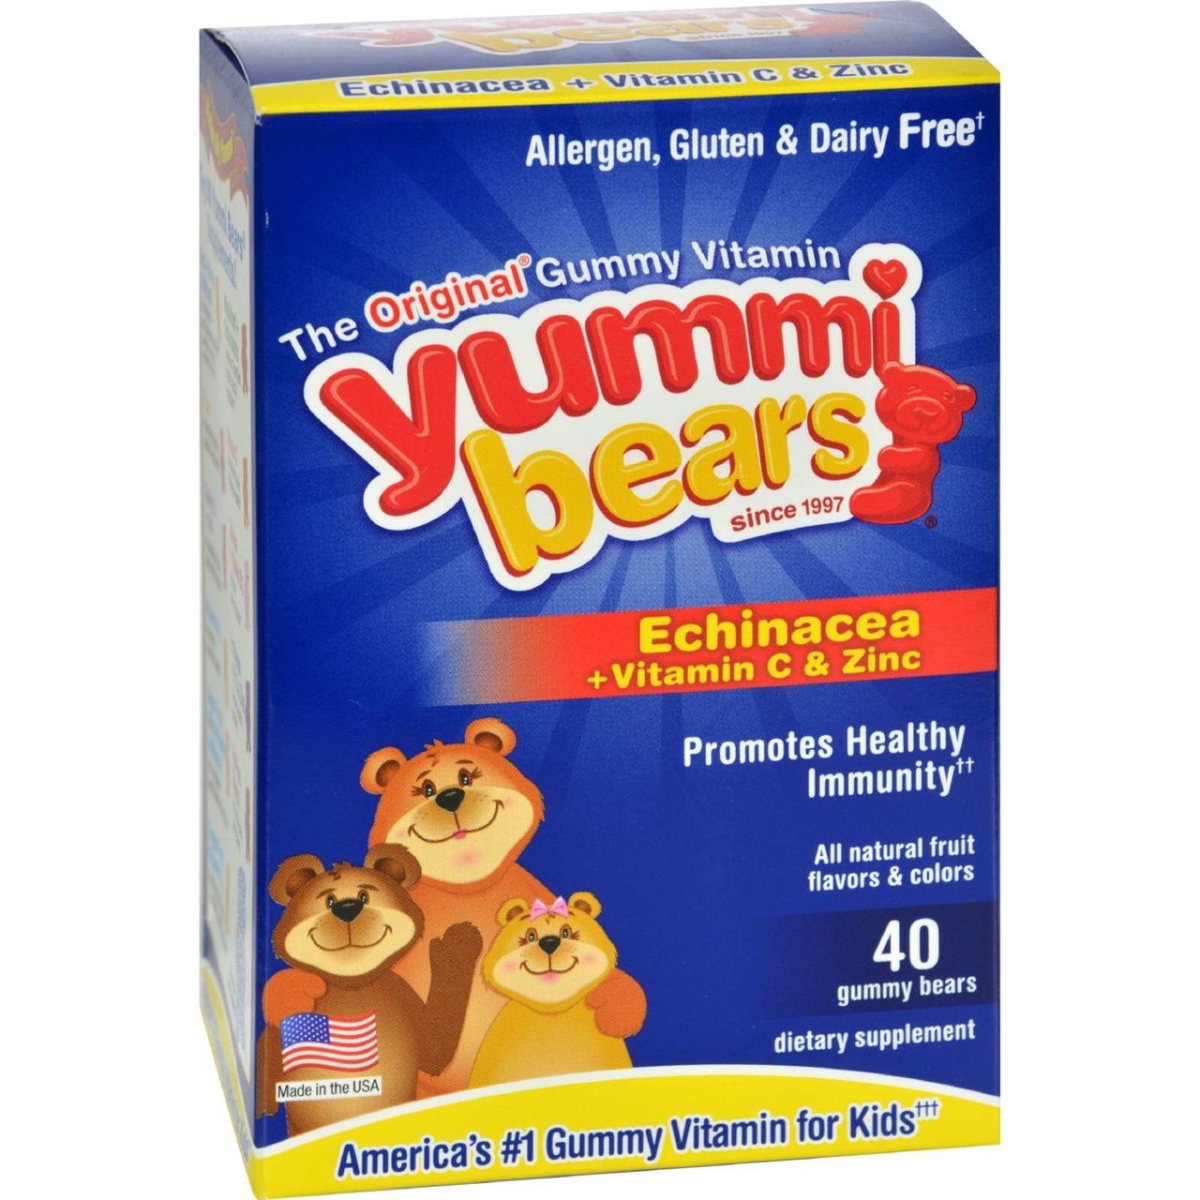 Hg0943266 Yummi Bears Echinacea Plus Vitamin C & Zinc - 40 Chewables